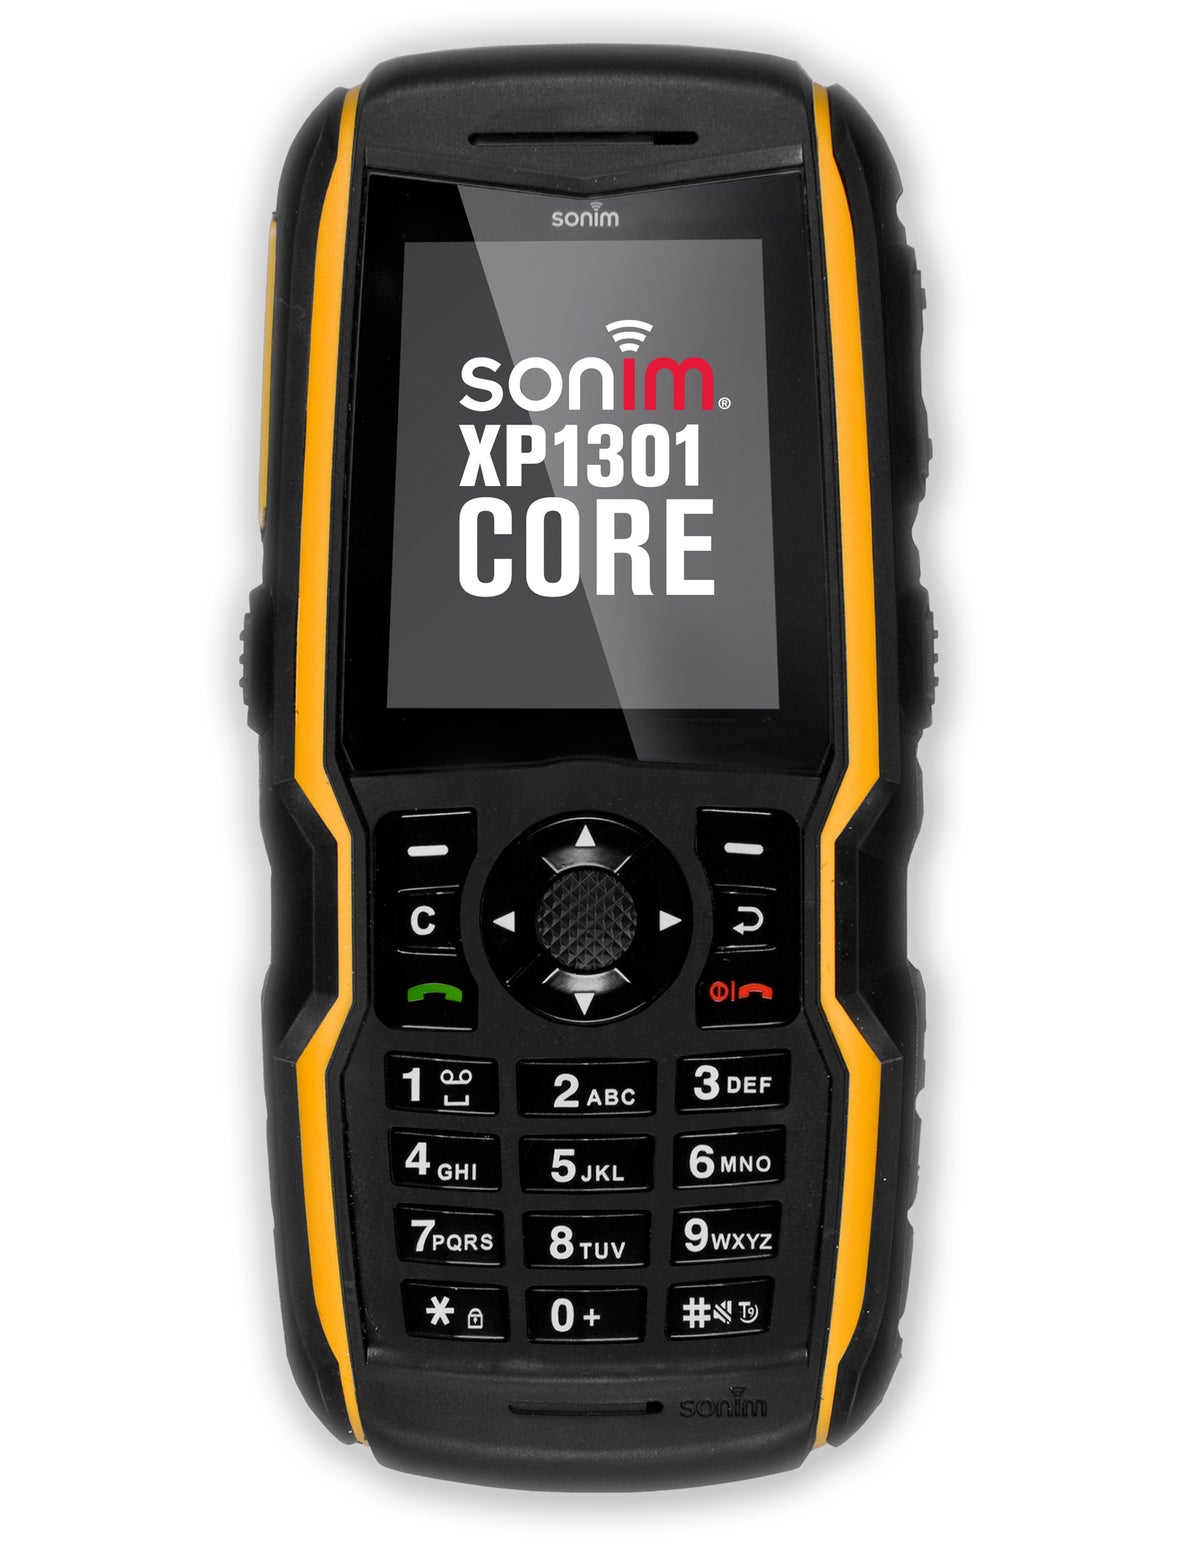 Sonim Xp1301 Core Specs Phonearena